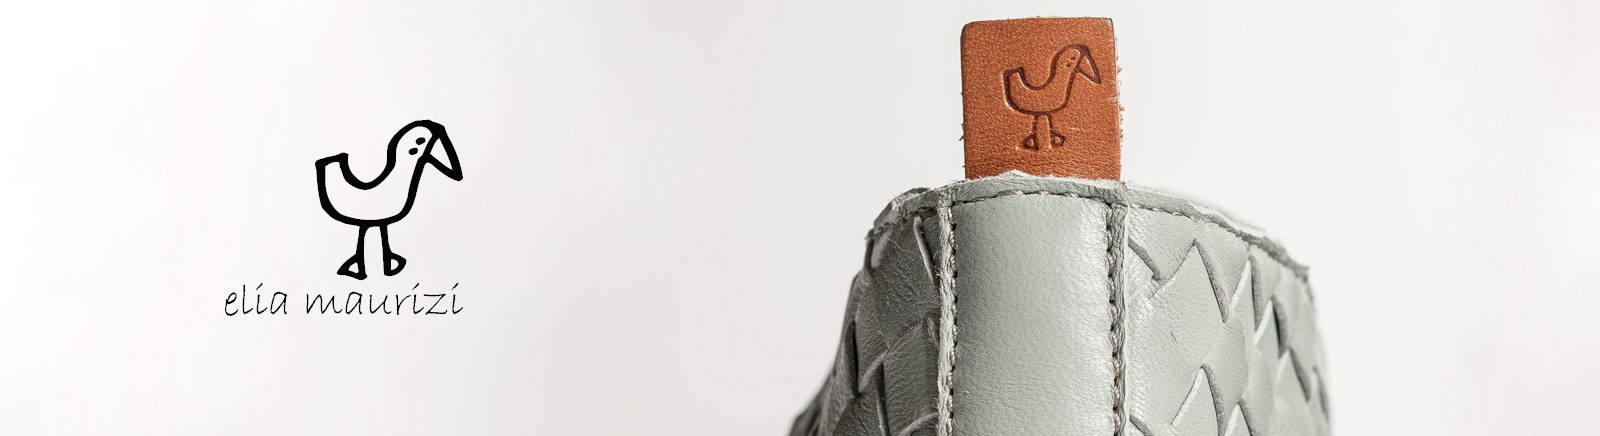 Elia Maurizi Chelsea Boots online kaufen im GISY Schuhe Shop